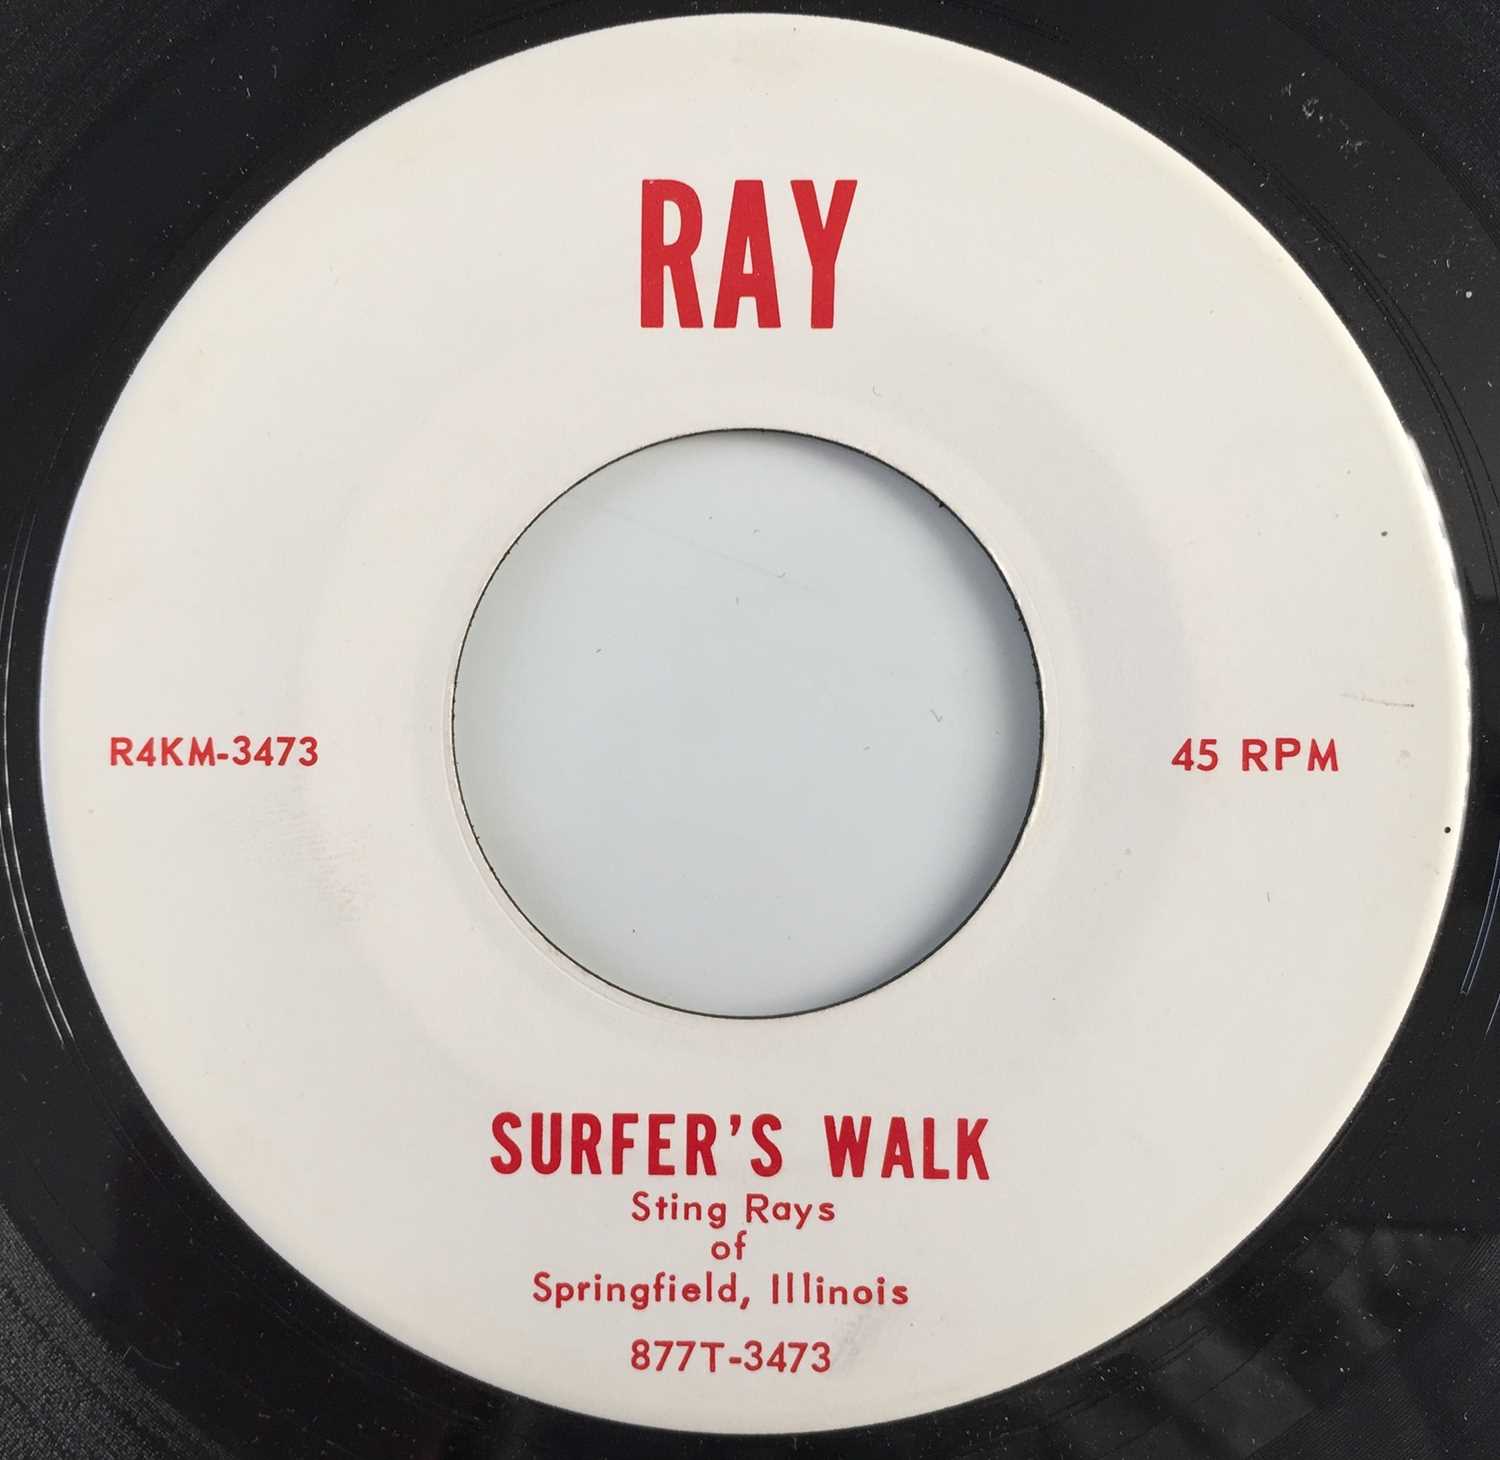 Lot 8 - STING RAYS OF SPRINGFIELD ILLINOIS - SURFER'S WALK 7" (US ROCKABILLY - RAY RECORDS 877T-3473)